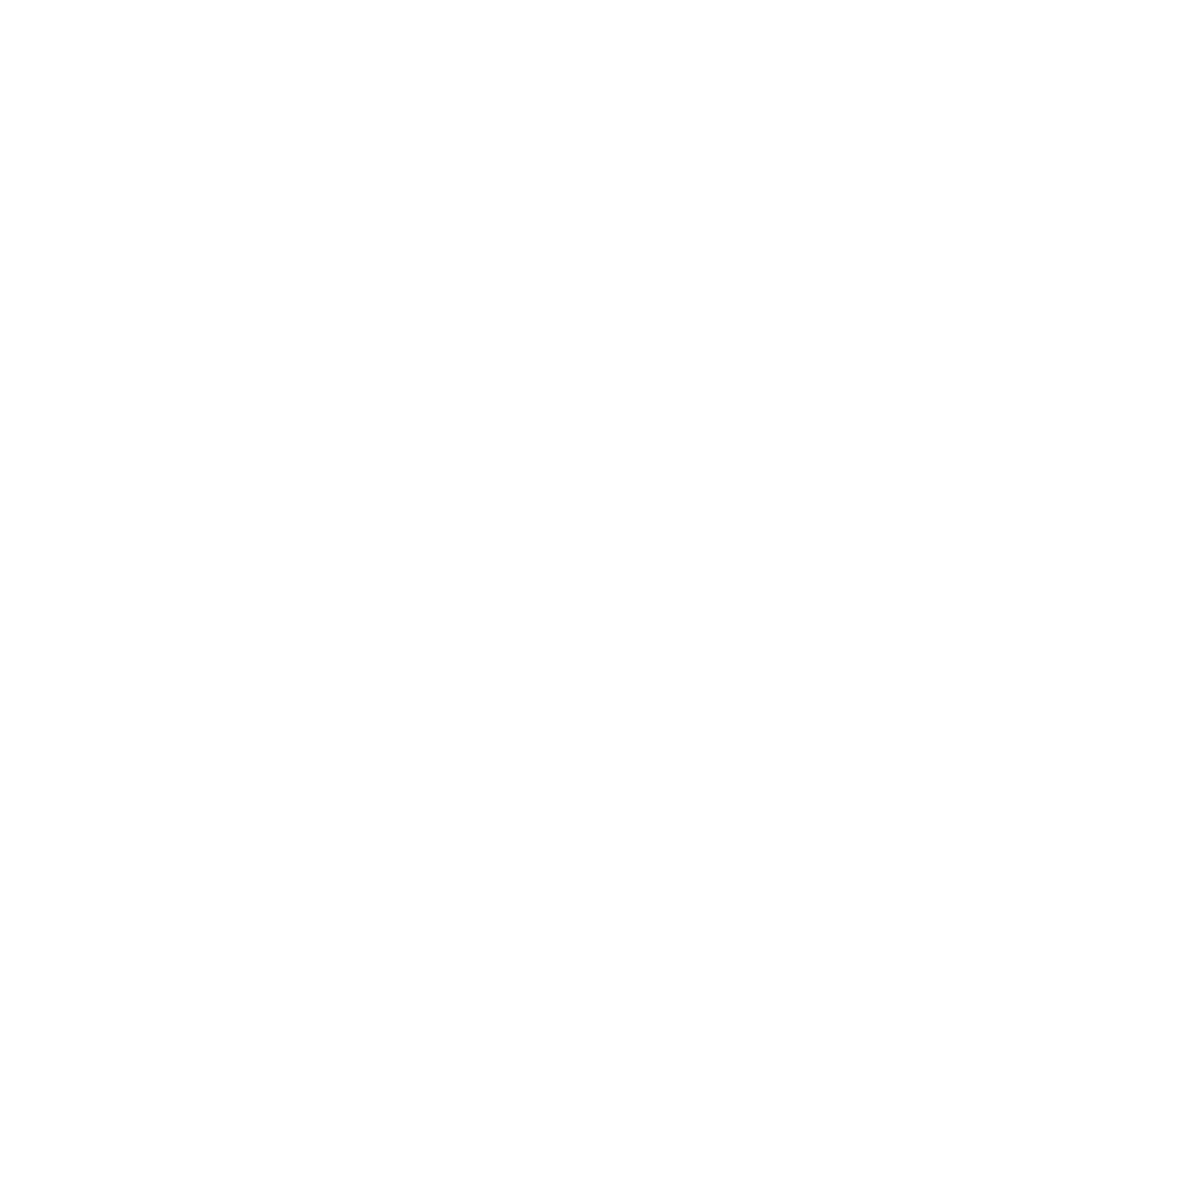 politechnika-logo-white